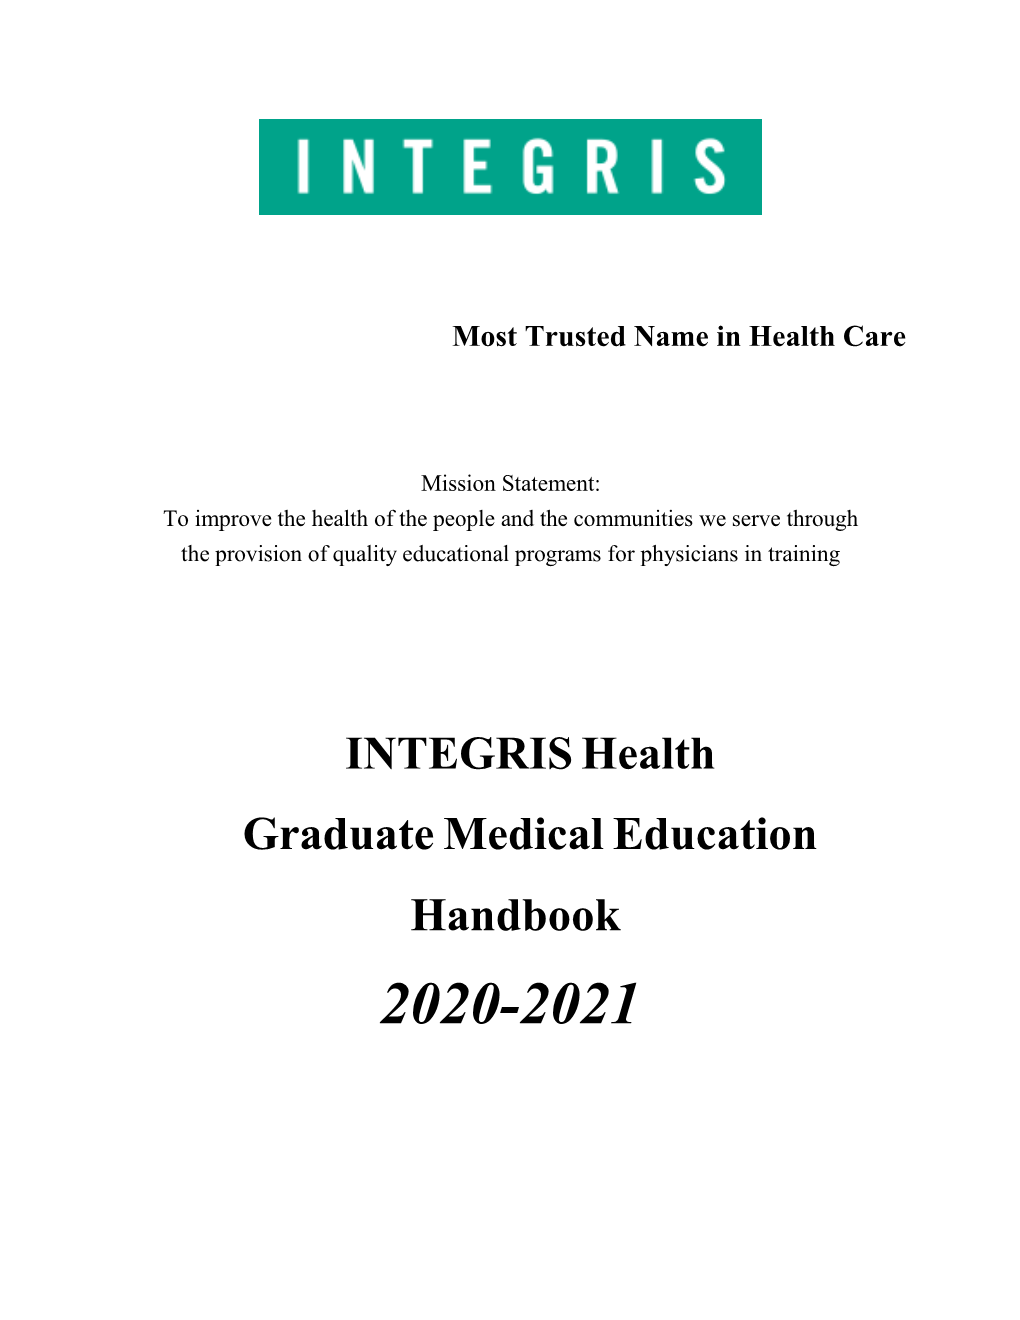 INTEGRIS Health Graduate Medical Education Handbook 2020-2021 Table of Contents